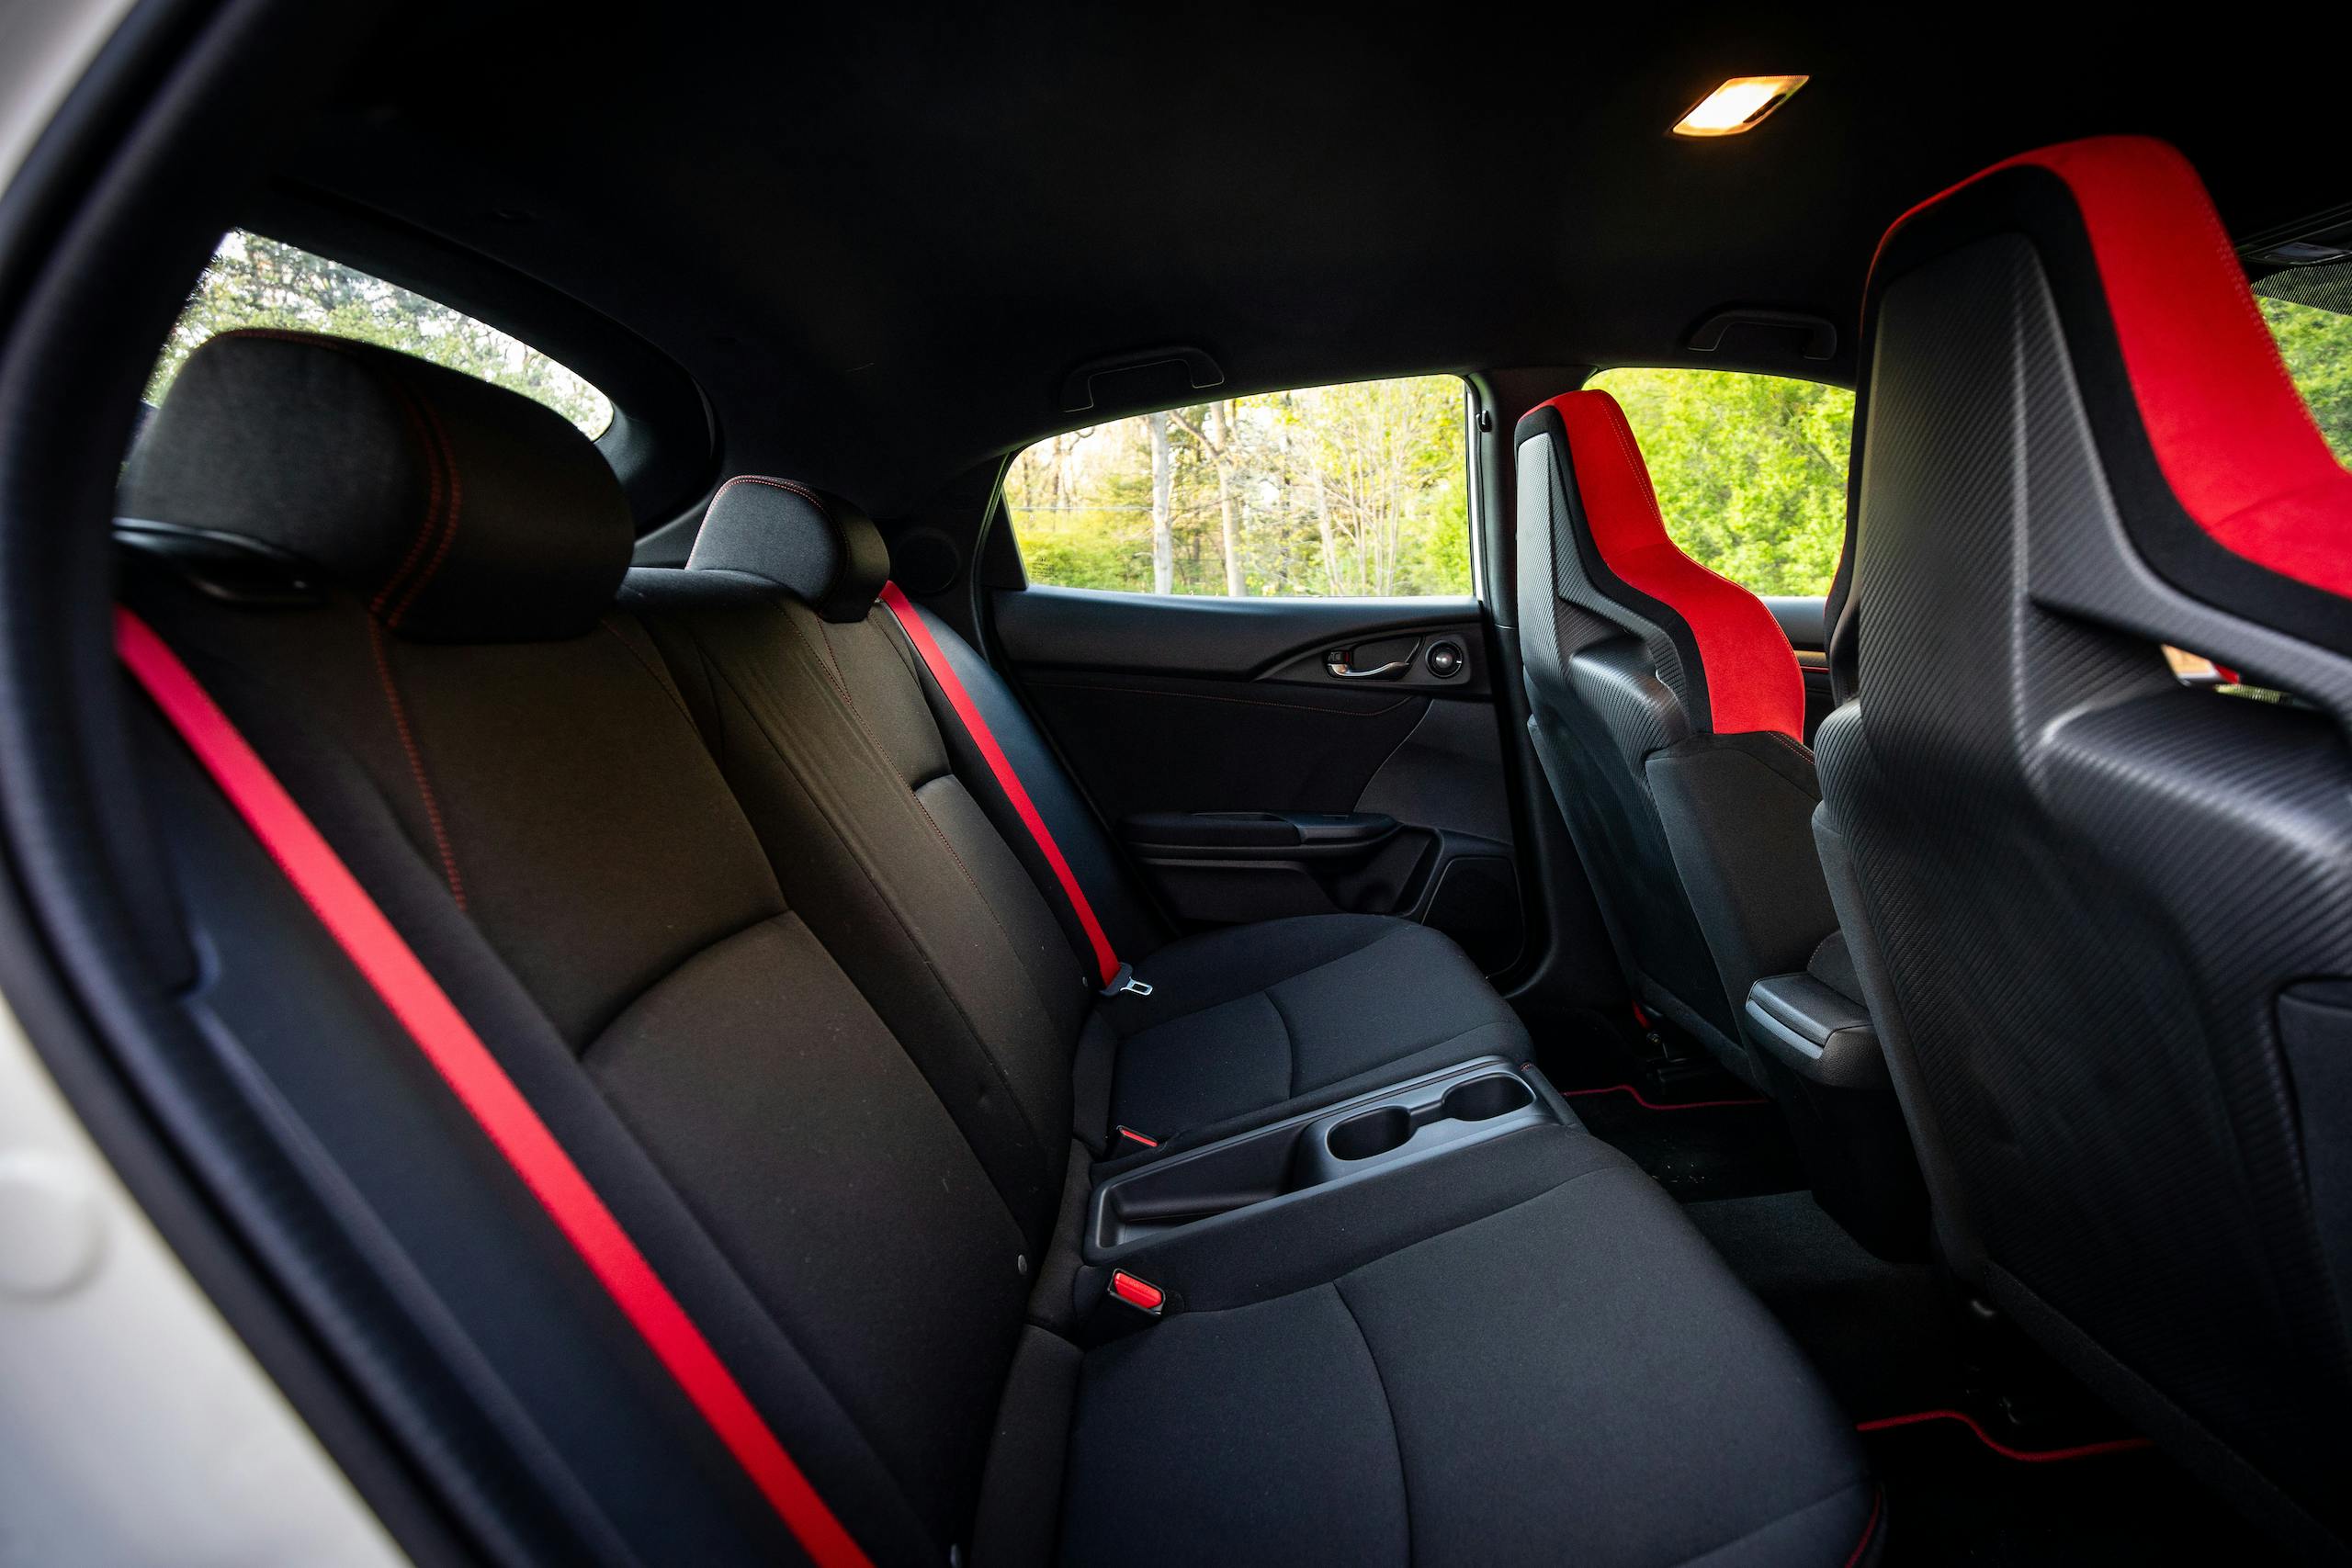 2020 Honda Civic Type R interior back seat